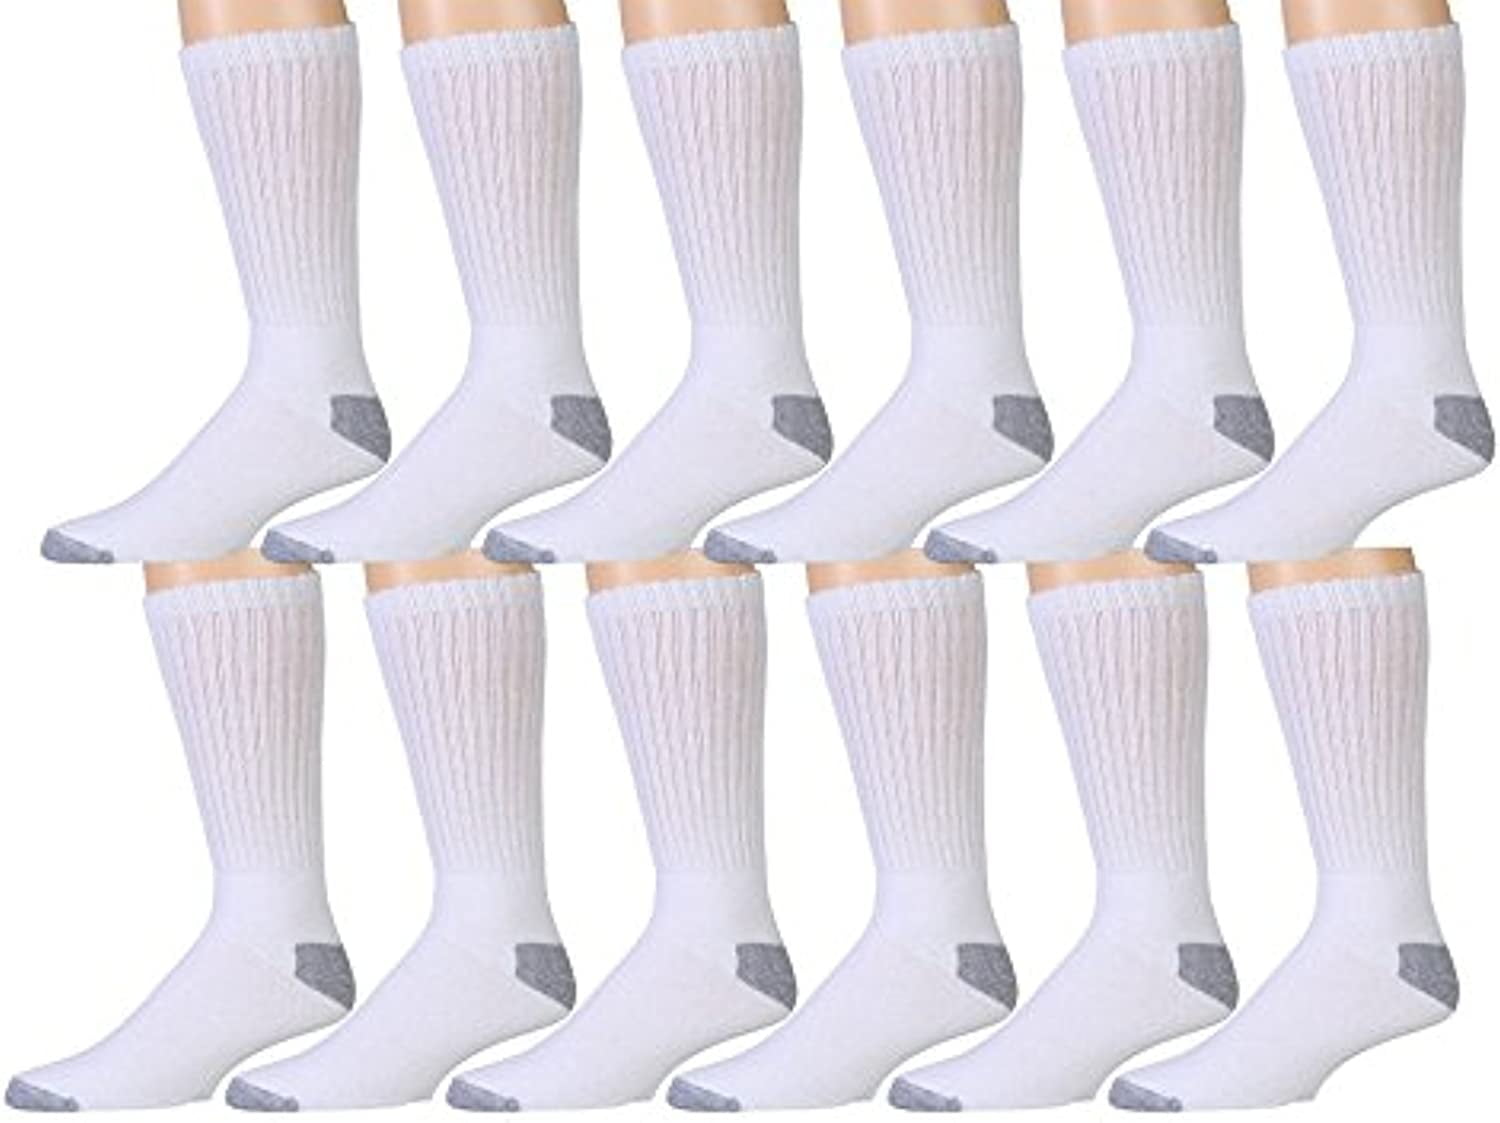 Ultrafun 5 Pairs Unisex Stripe Crew Socks Breathable Athletic Sports Gym  School Casual Quarter Ankle Socks for Men Women (5Pairs Black-white stripe)  at  Men's Clothing store